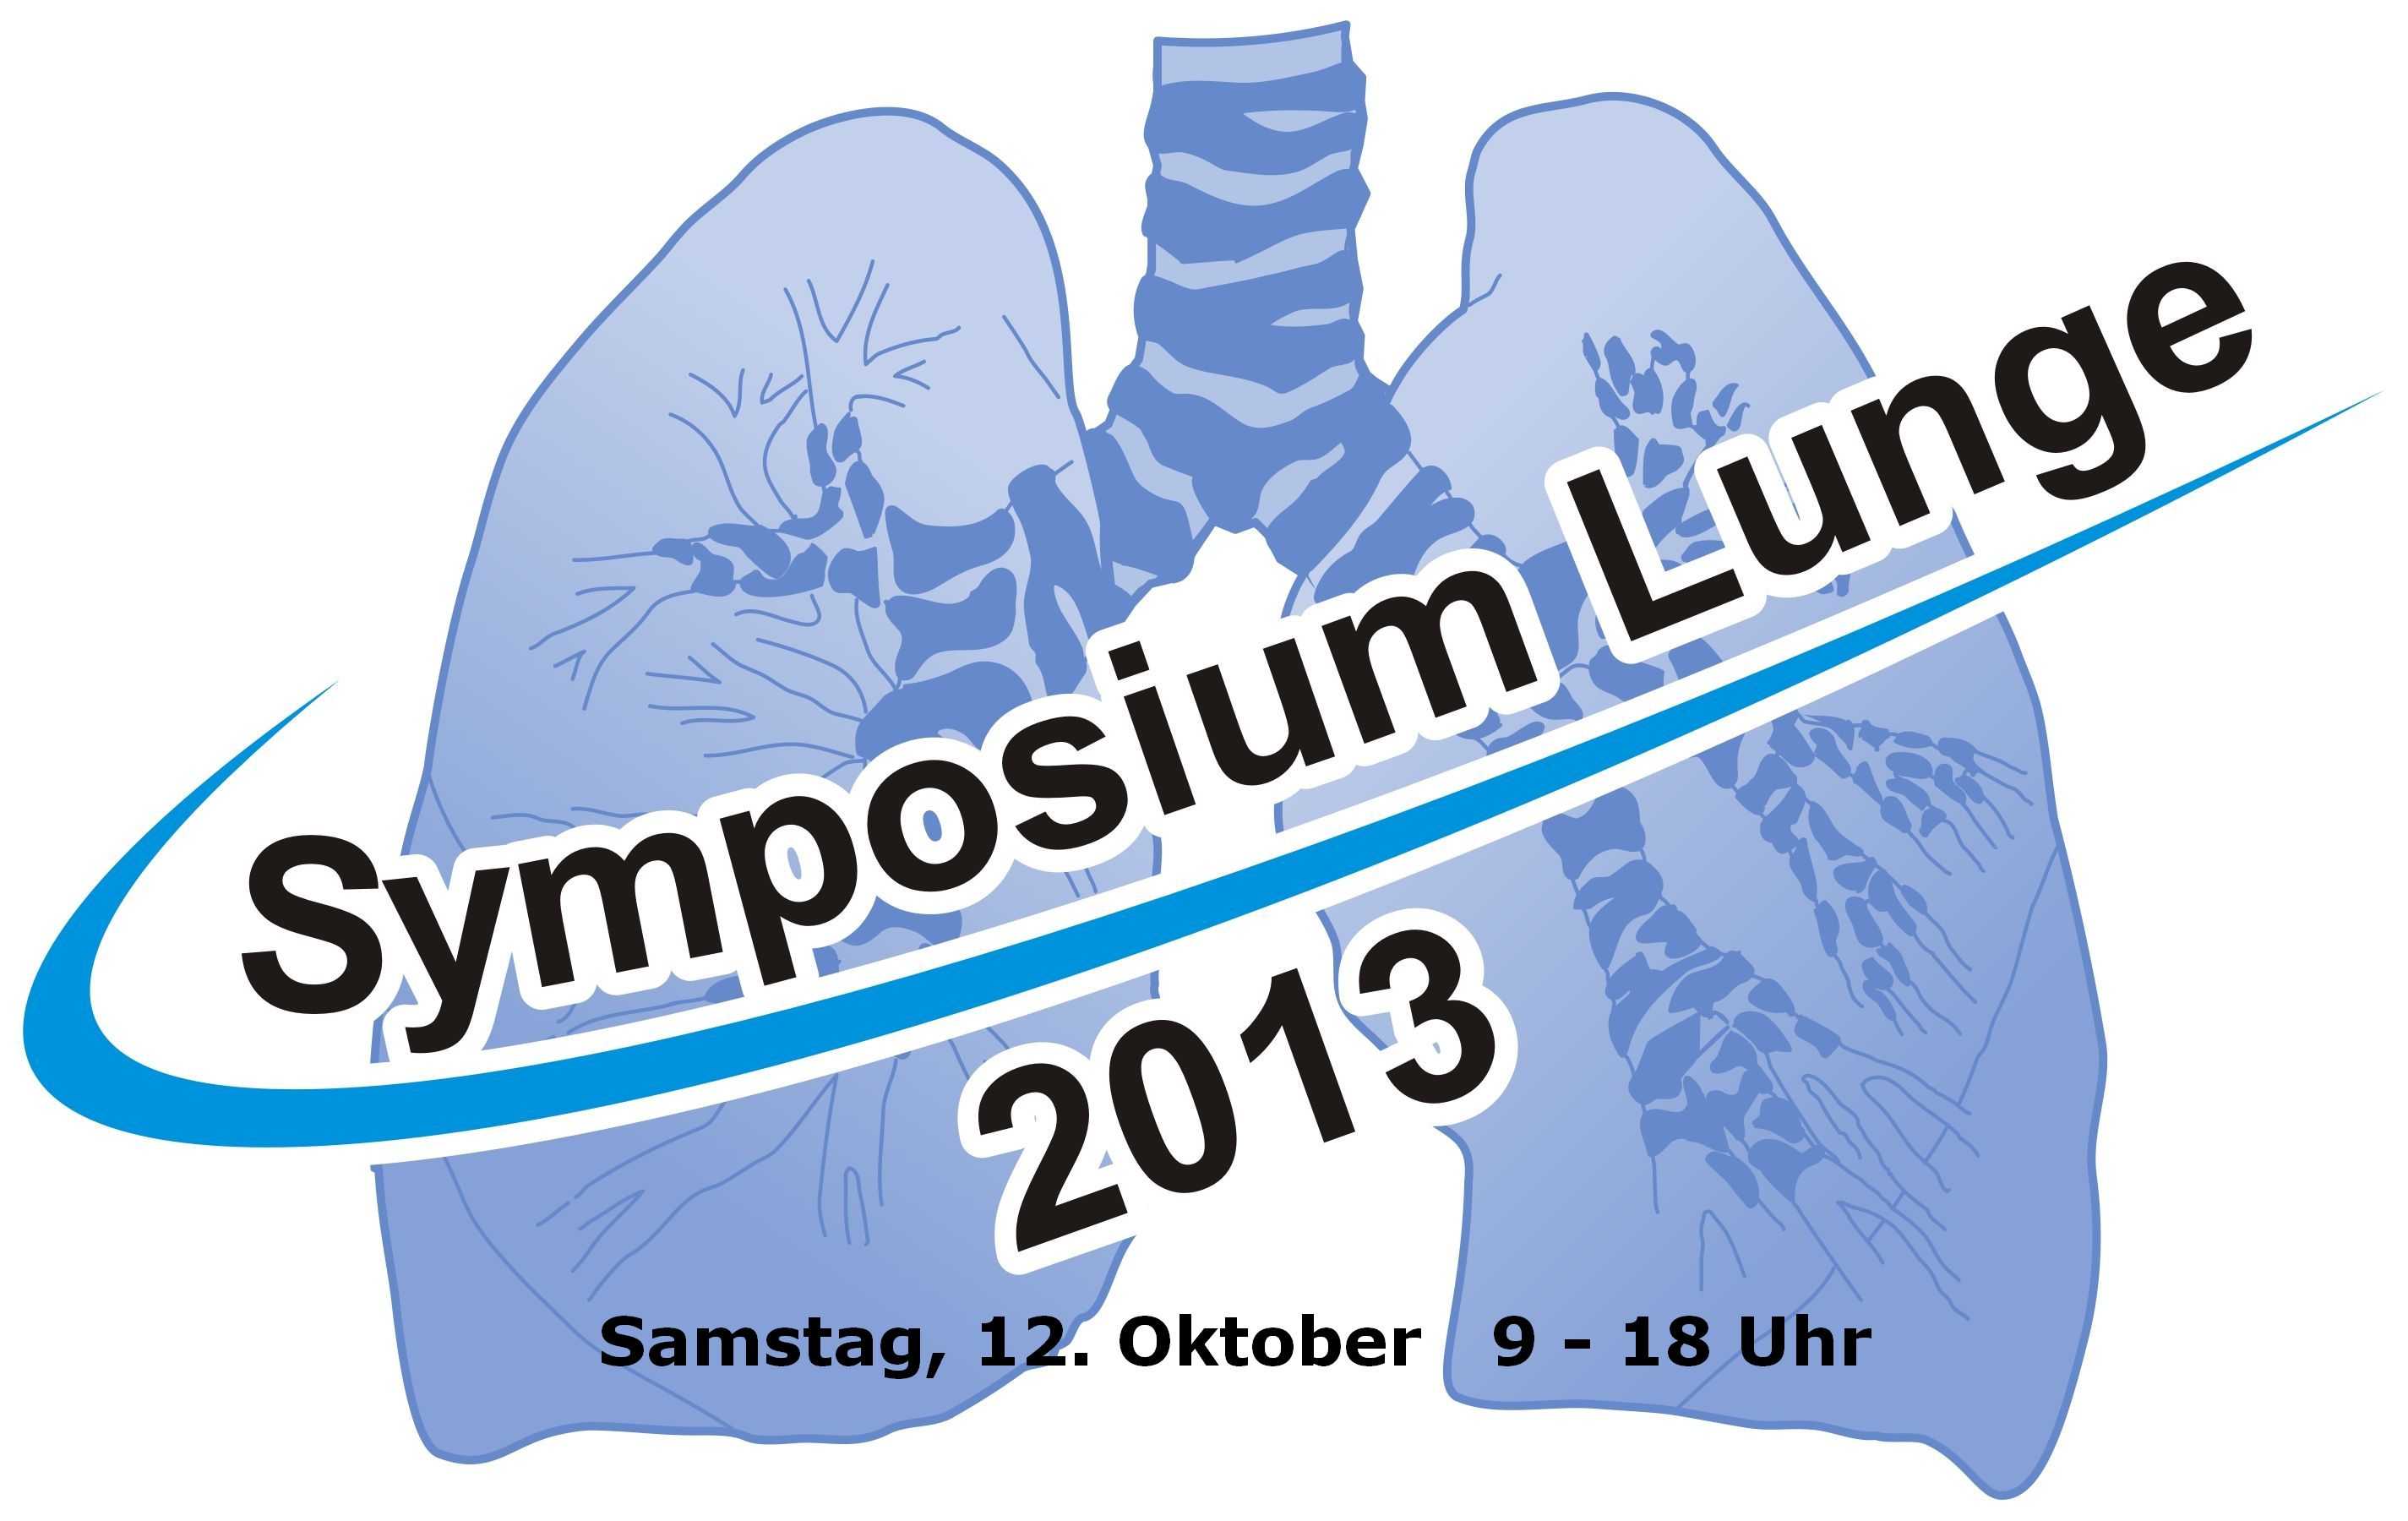 Auto News | Symposium-Lunge 2013